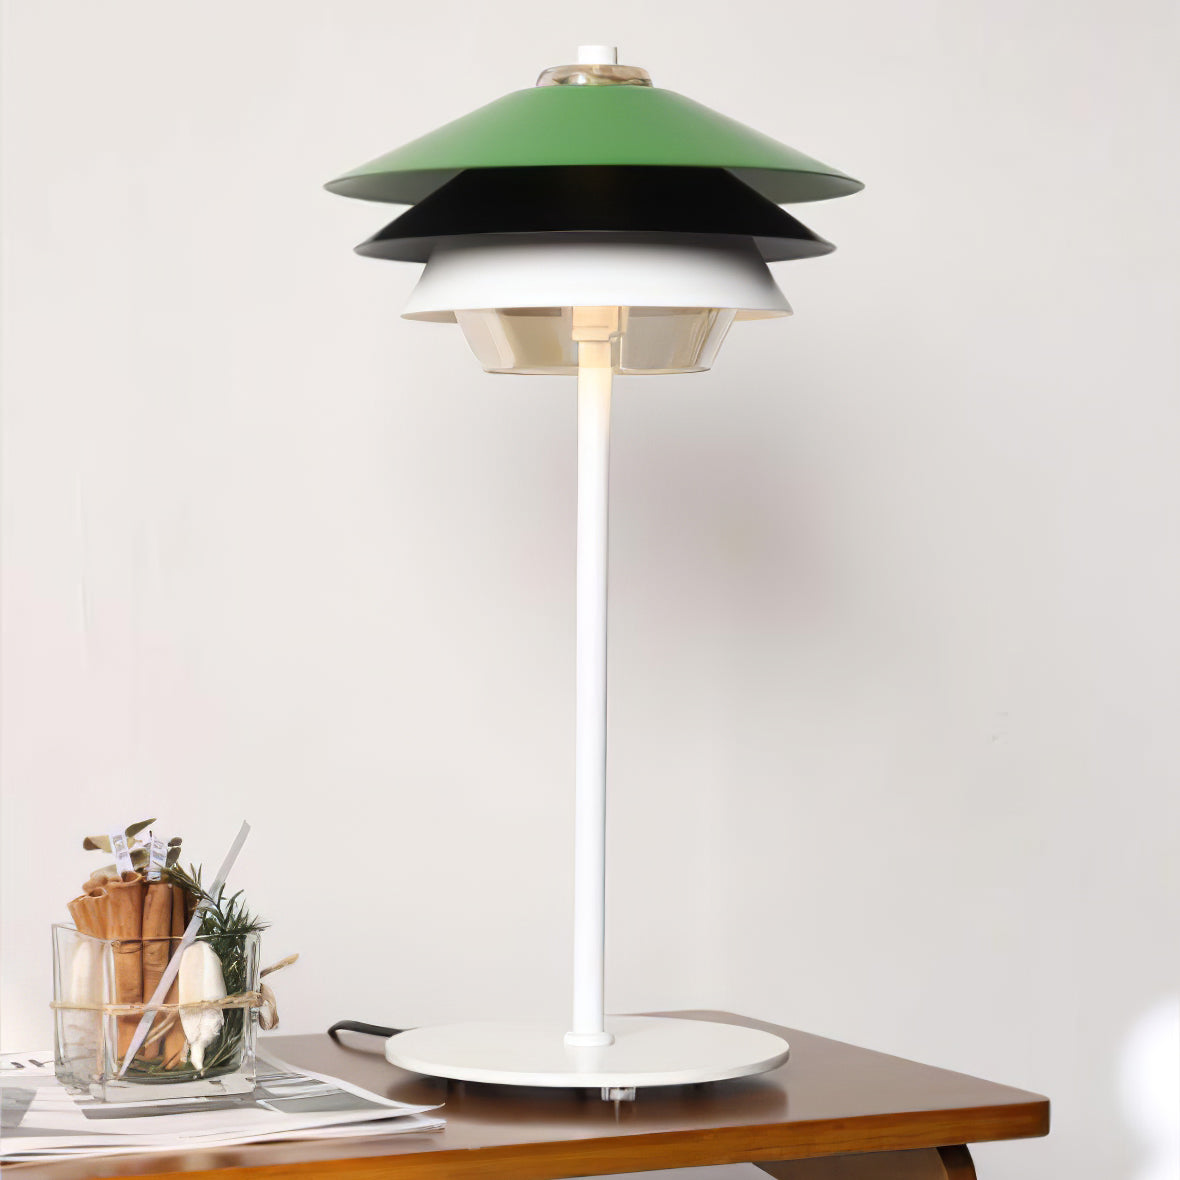 Danish Art Overlay Green Table Lamp